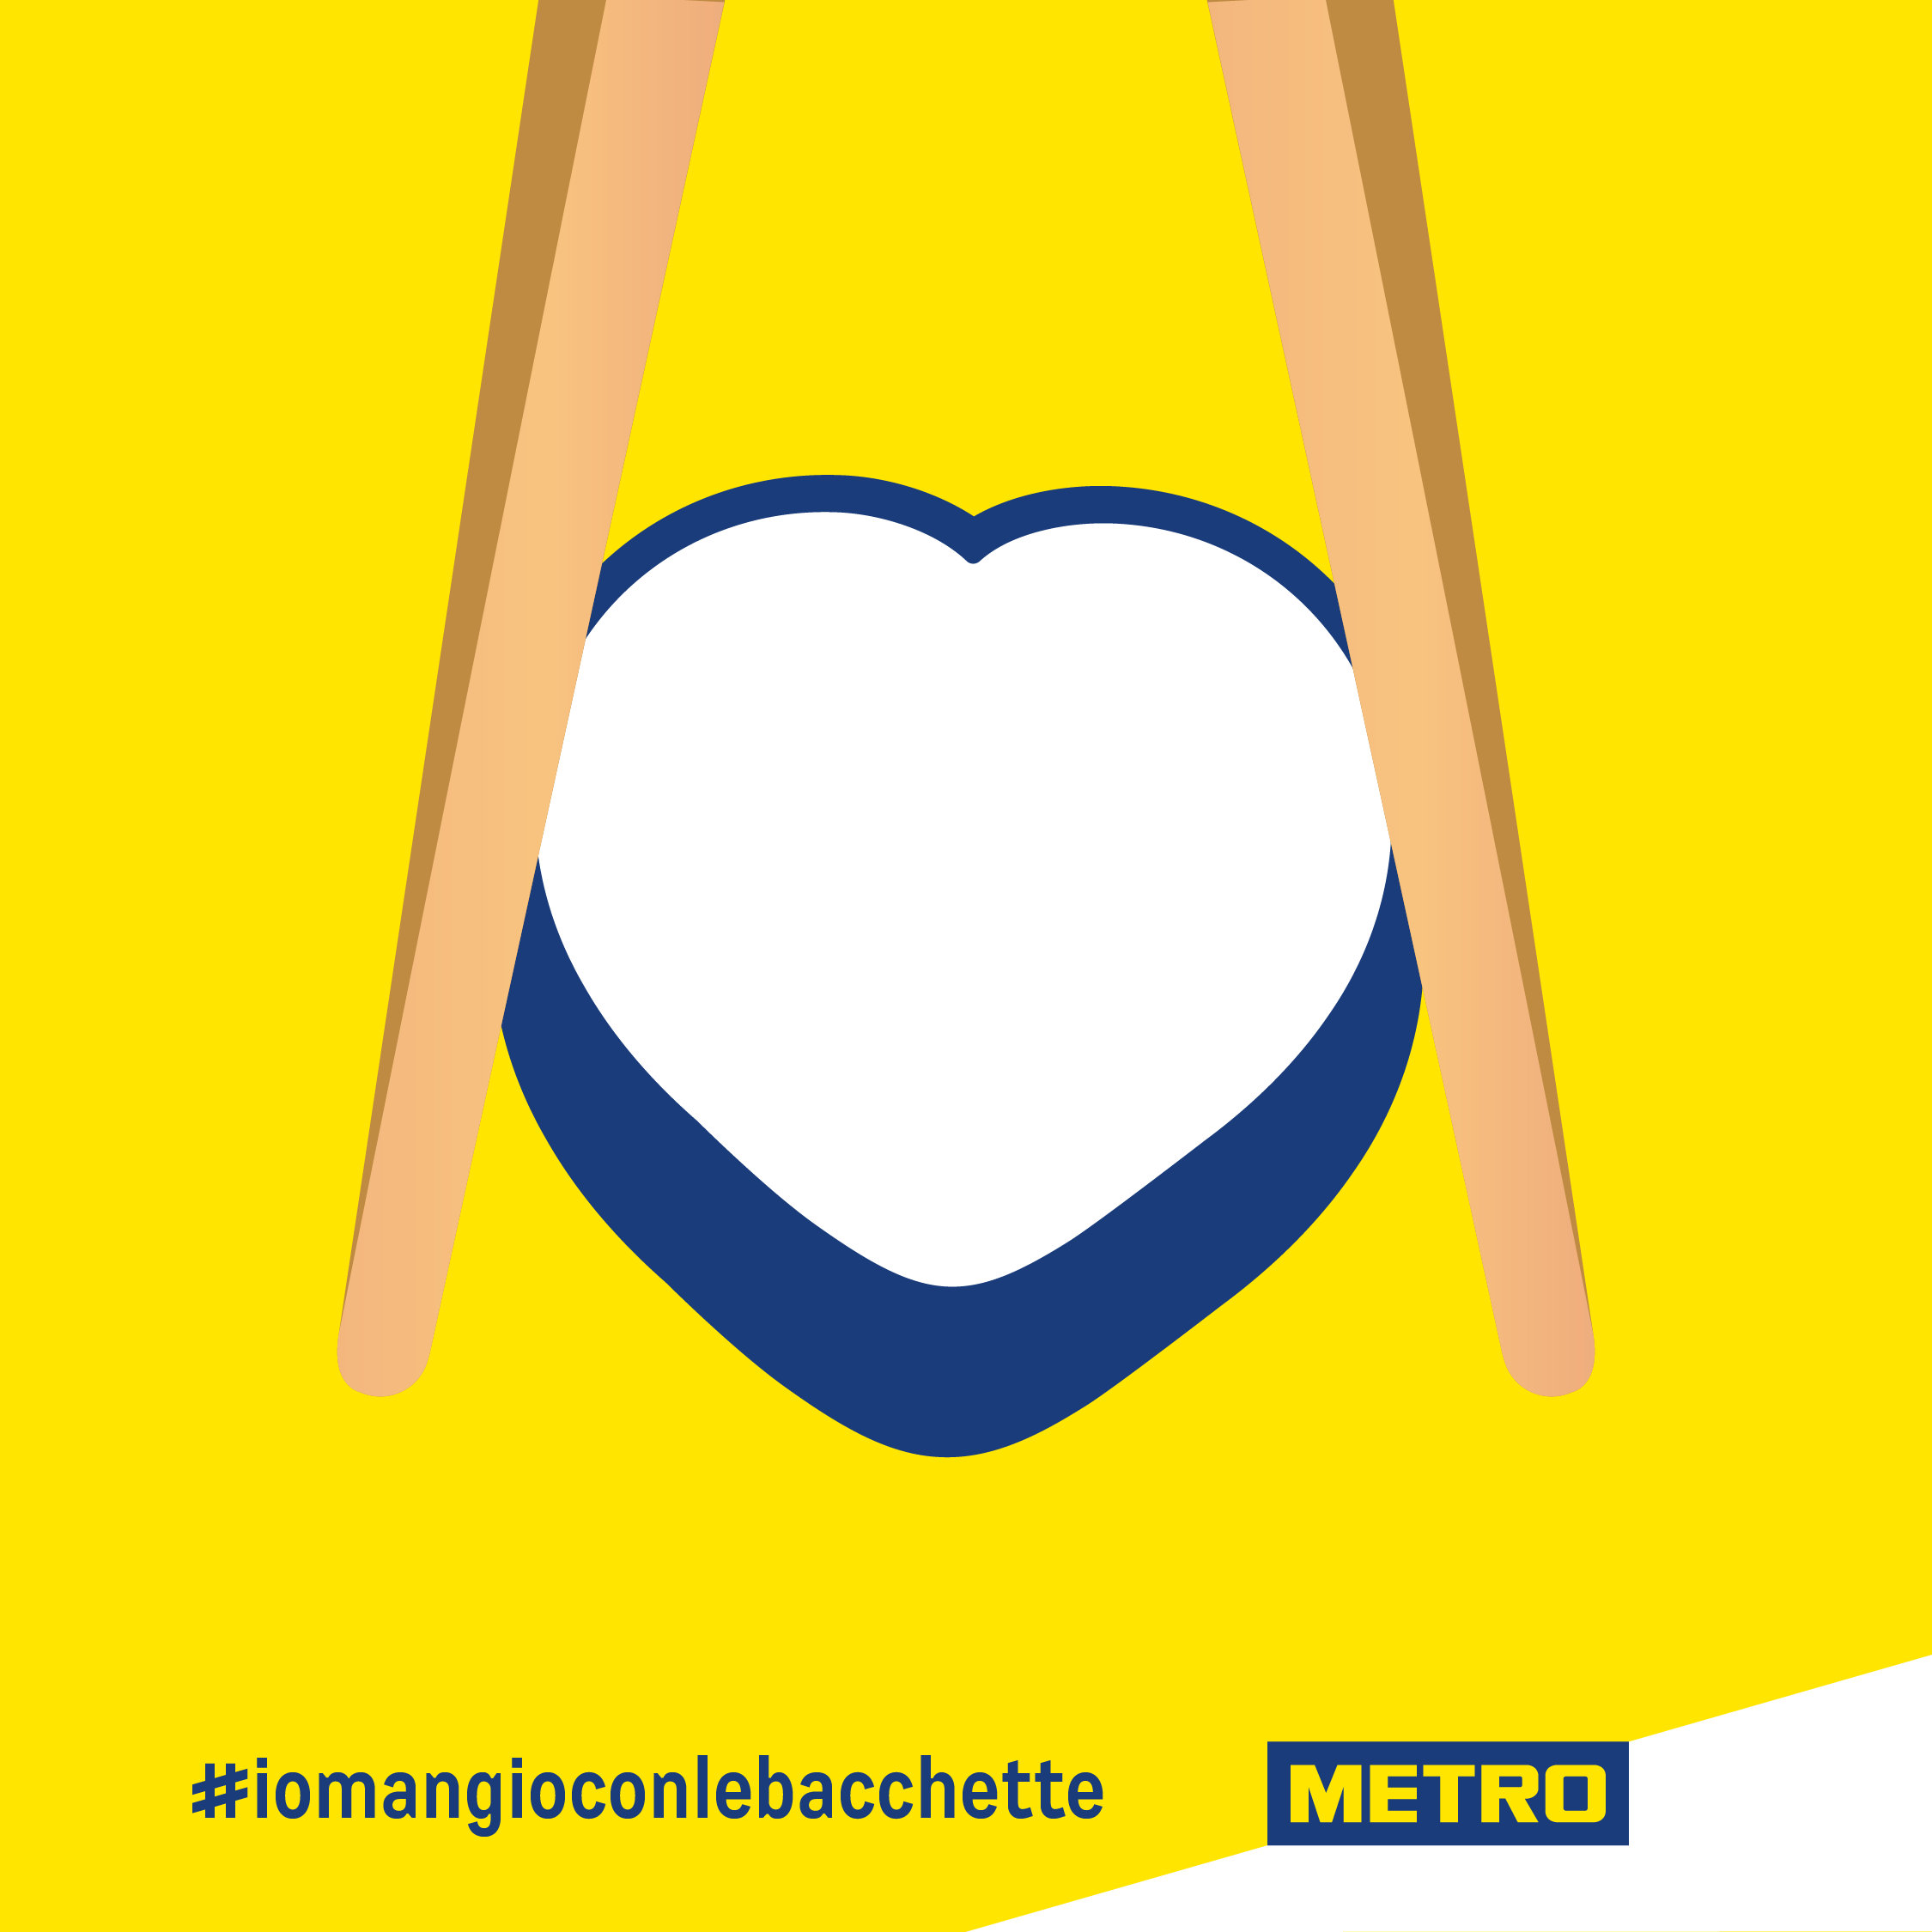 METRO italia, #iomangioconlebacchette